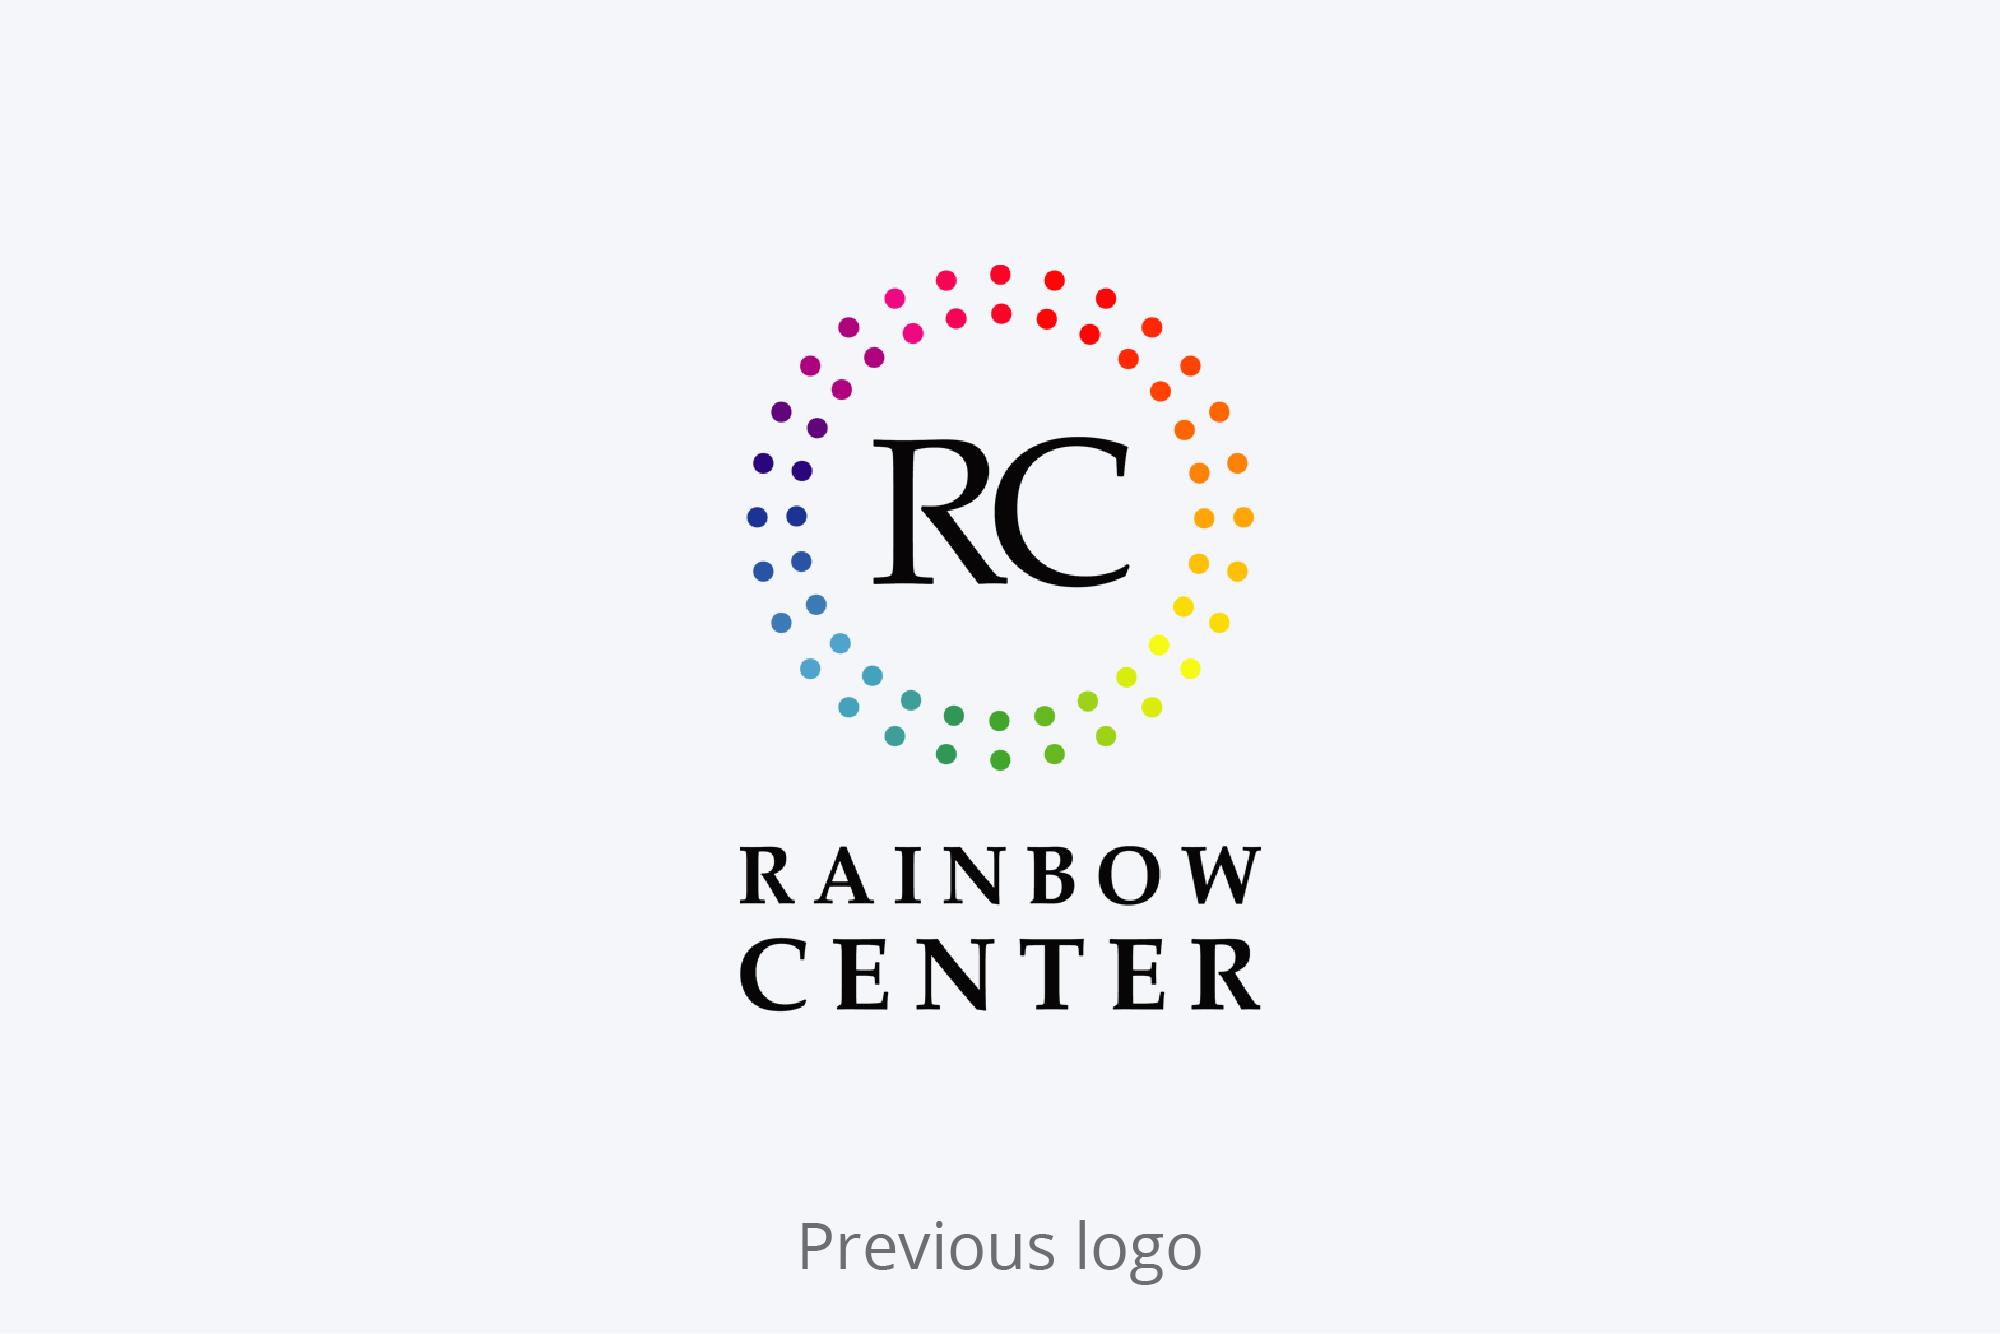 Old Rainbow Center logo